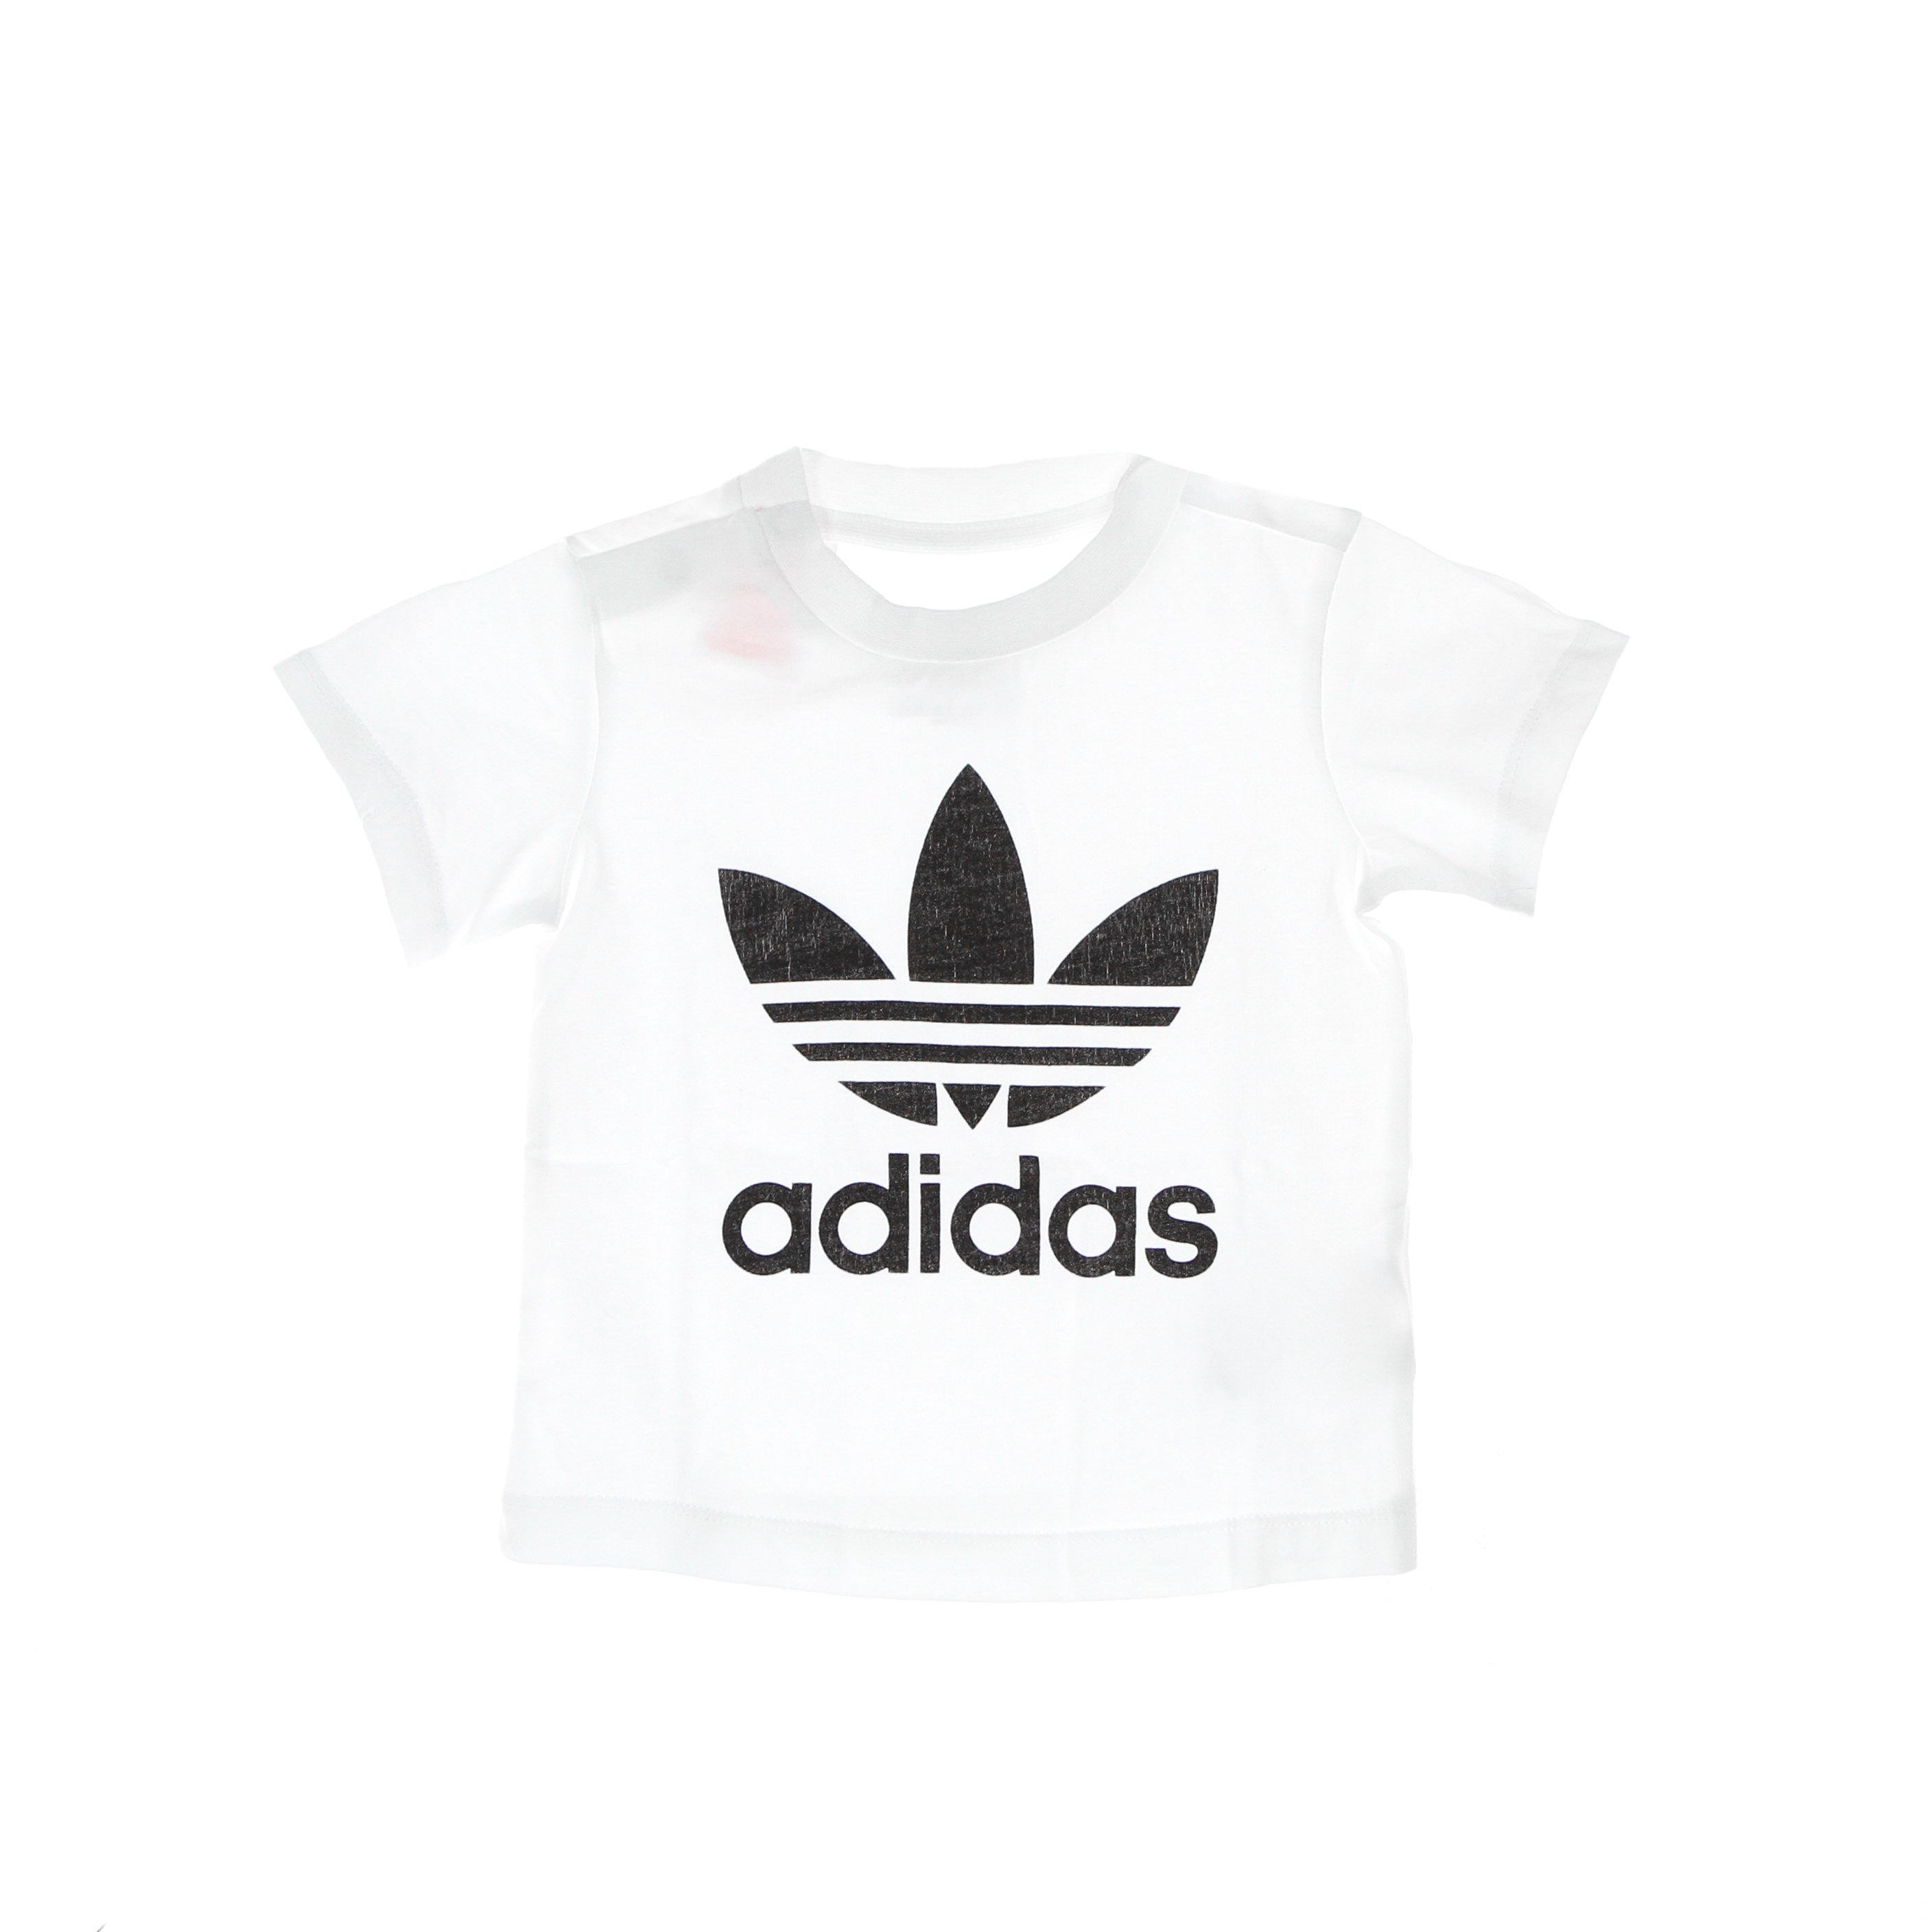 Adidas, Maglietta Bambino Trefoil Tee, White/black